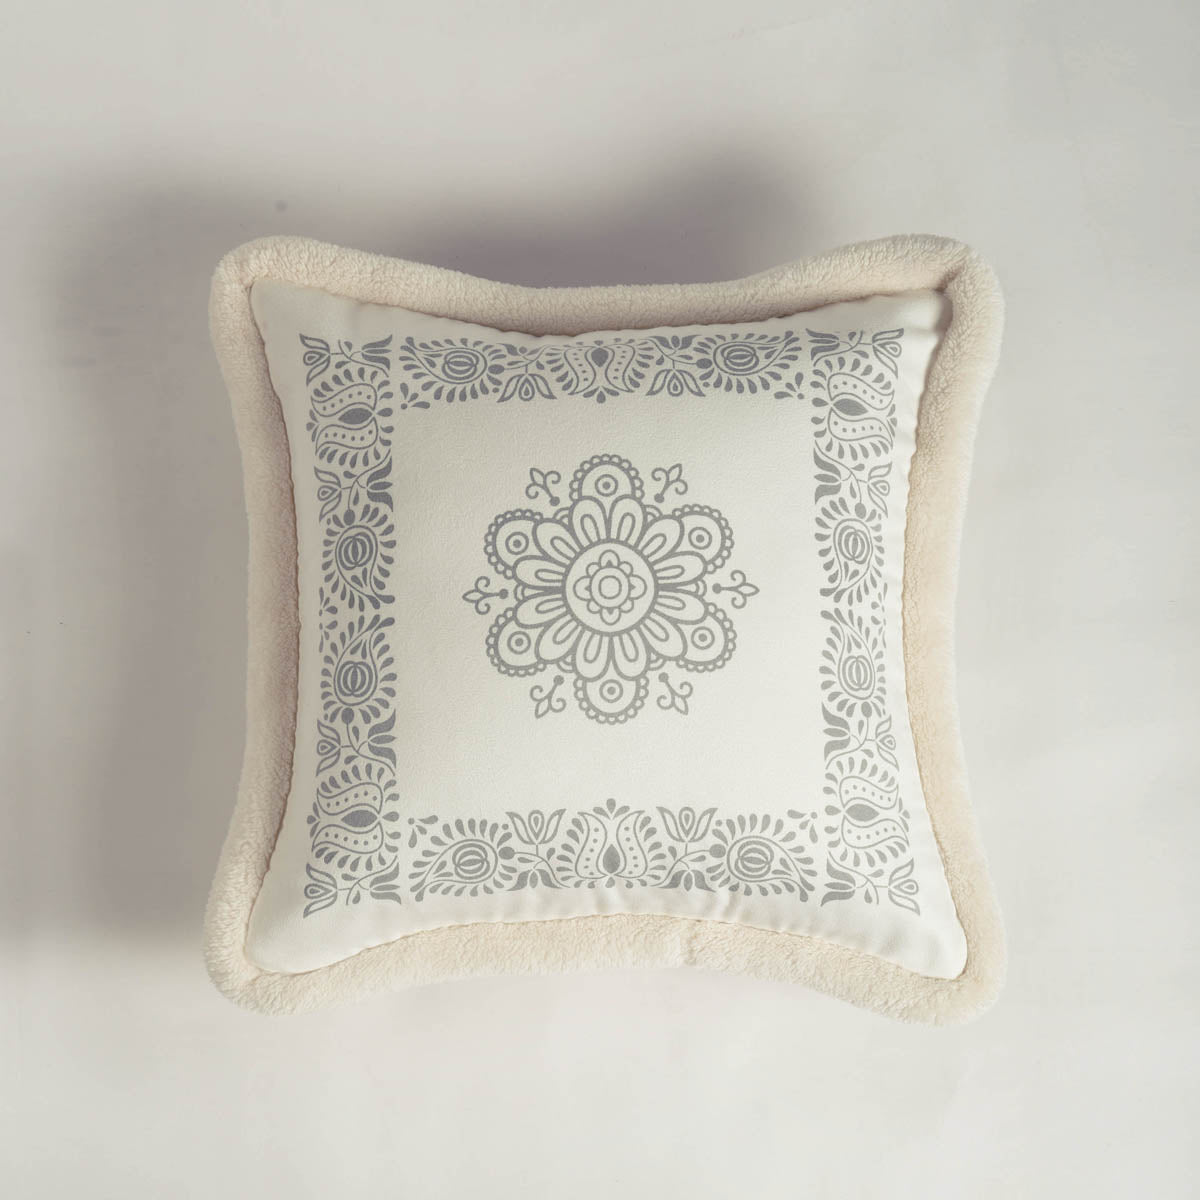 Svenska - off white printed pillow cover, nordic style cushion cover, Scandinavian